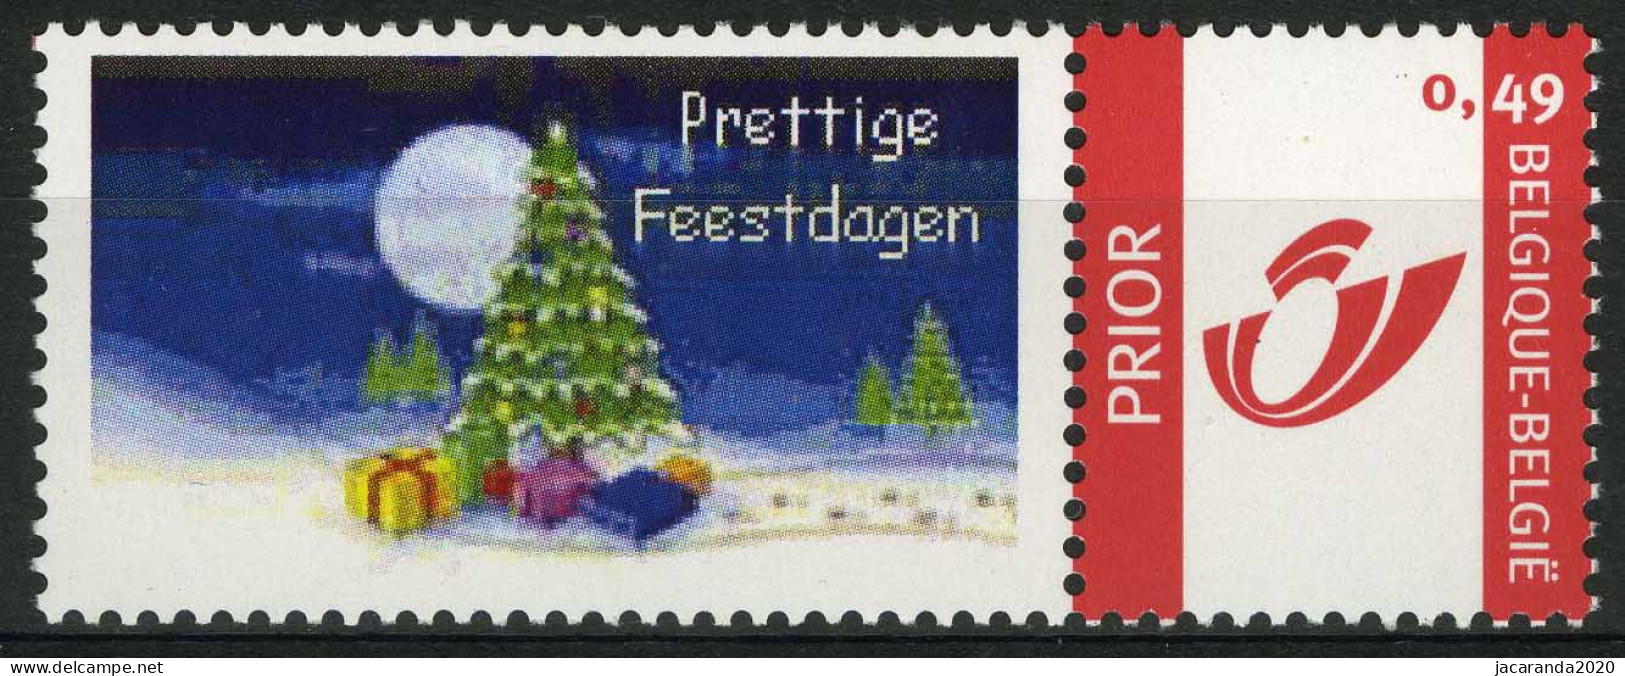 België 3183 - Duostamp - Prettige Feestdagen - Kerstboom - Ungebraucht